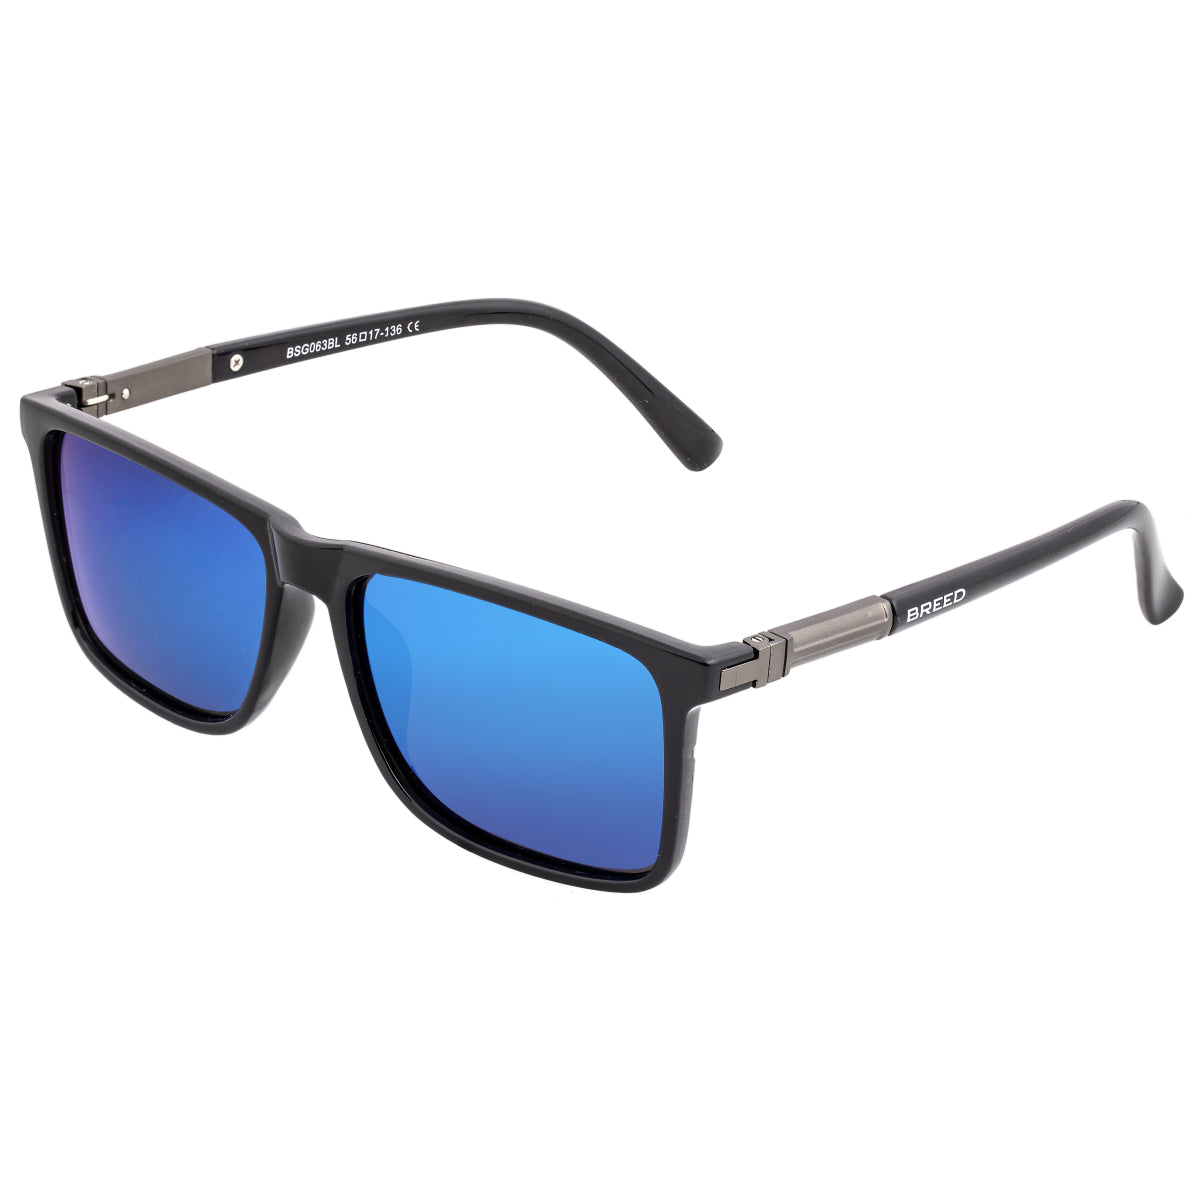 Breed Caelum Polarized Sunglasses - Black/Blue - BSG063BL